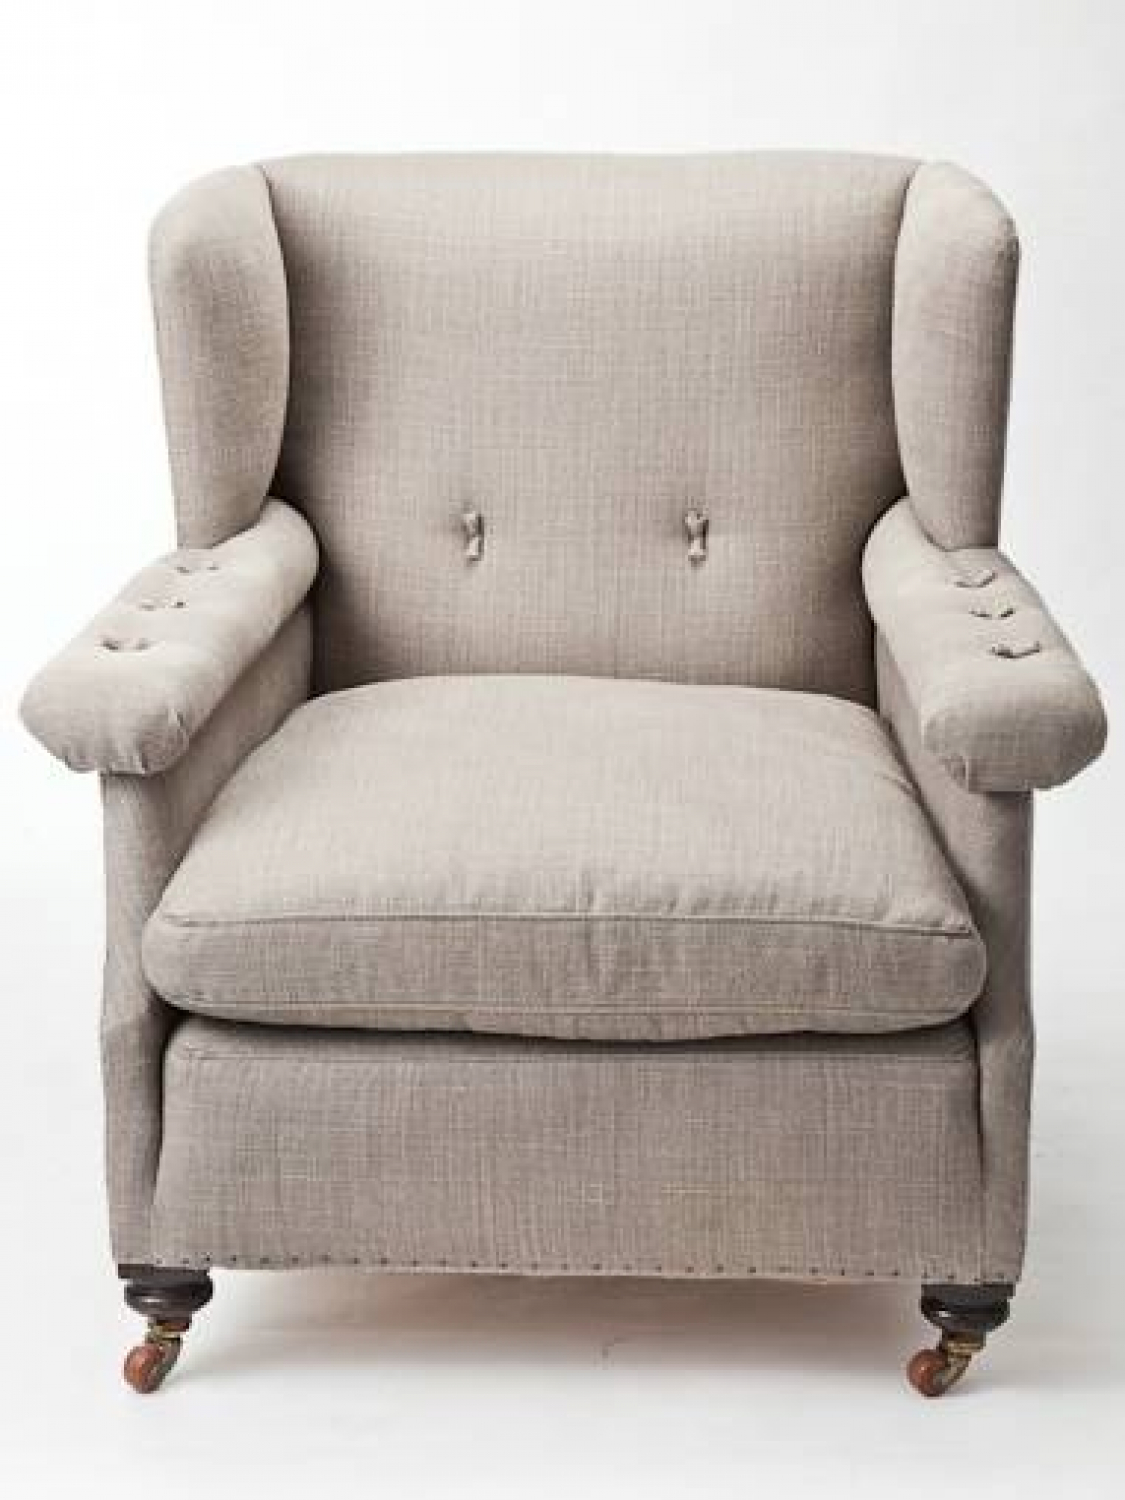 Large English armchair